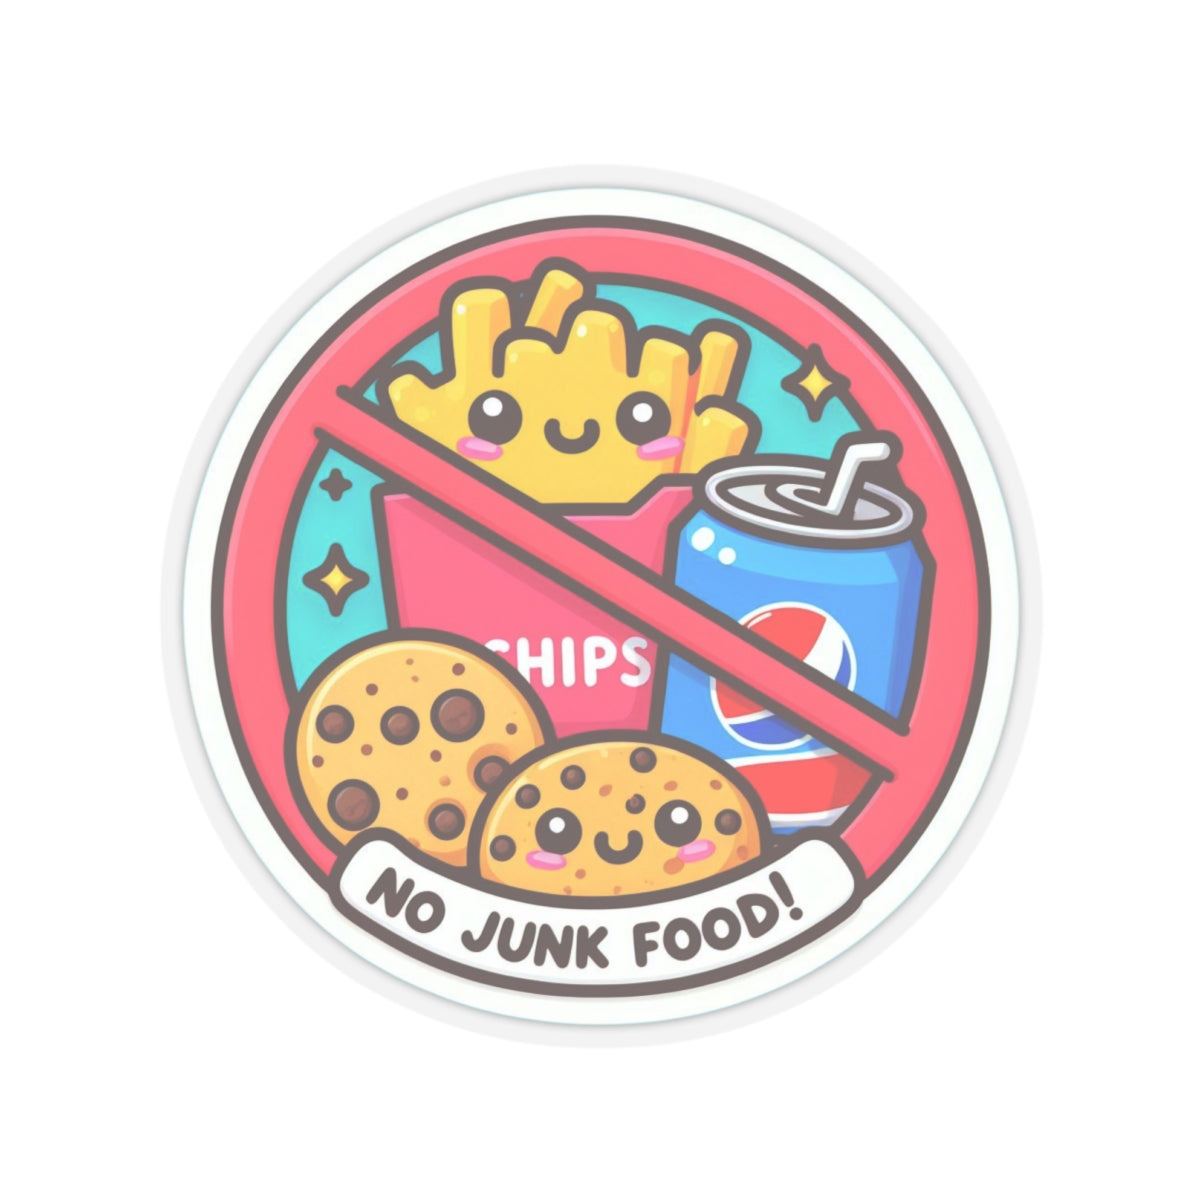 No Junk Food Kiss-Cut Stickers